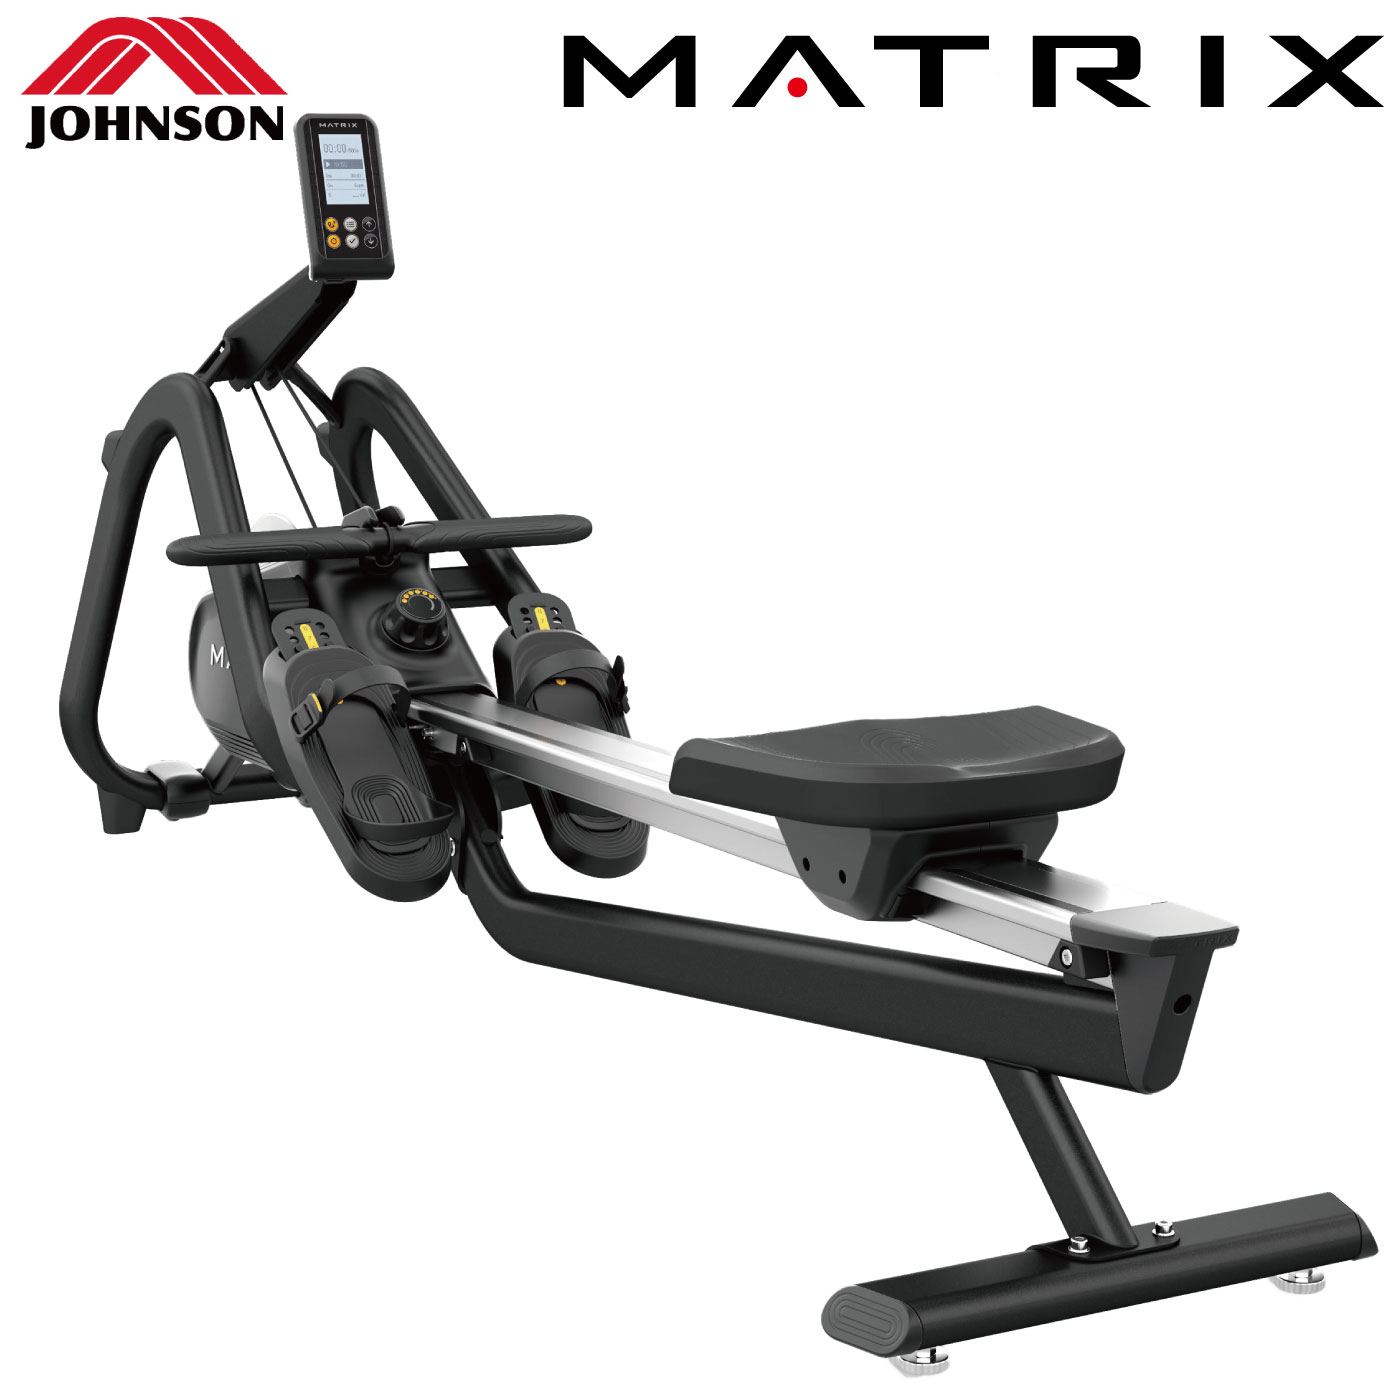 Rower（ローアー）／ローイングマシン〈業務用MATRIX〉《ジョンソン